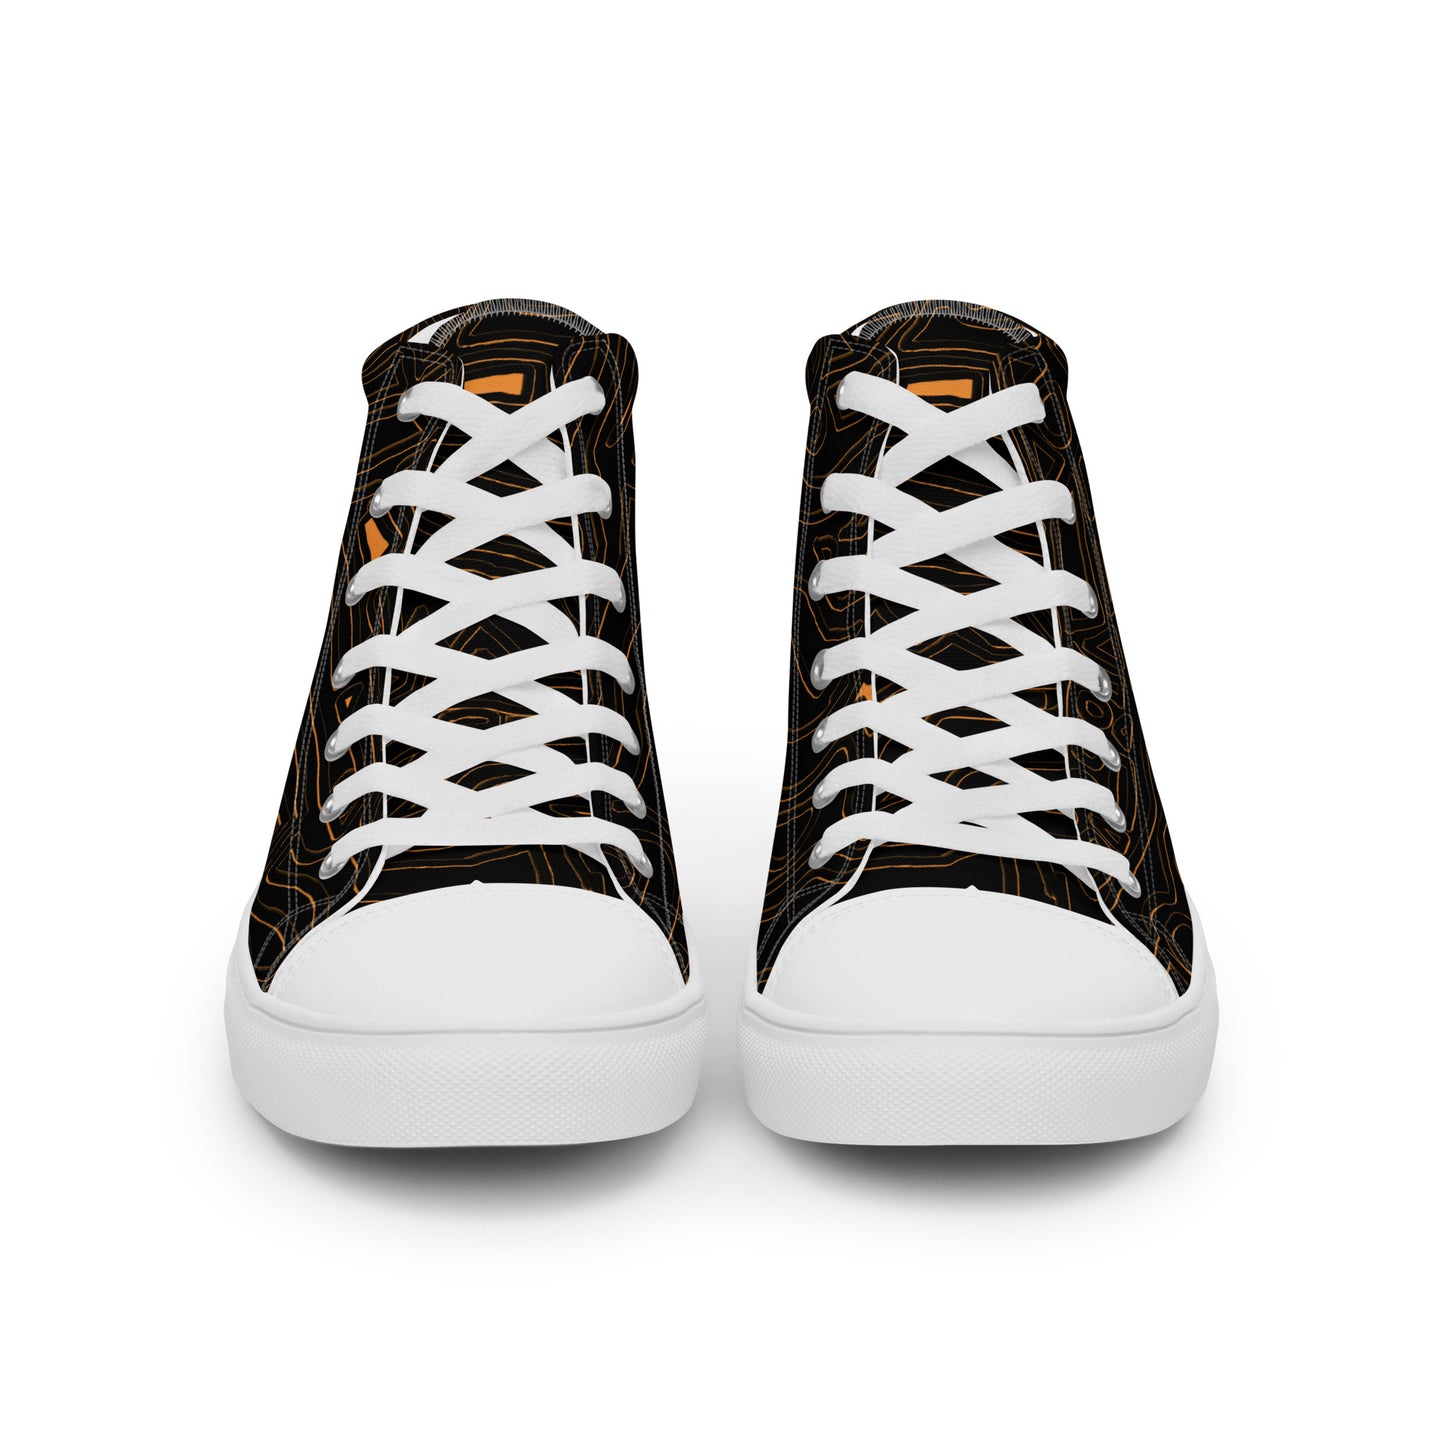 Obatala - Men's high canvas sneakers